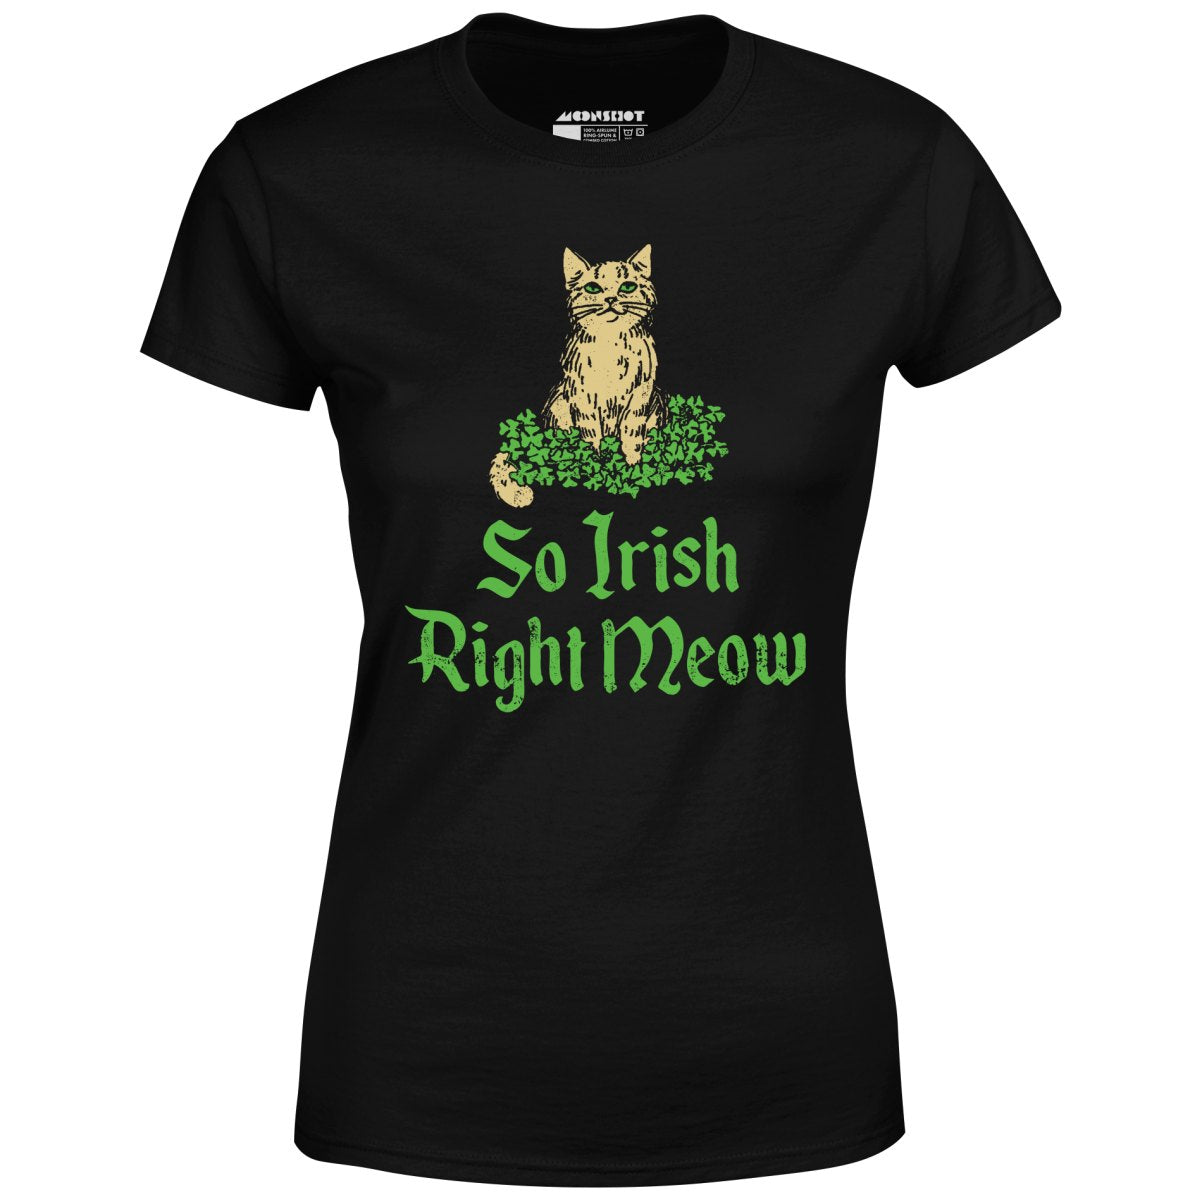 So Irish Right Meow - Women's T-Shirt